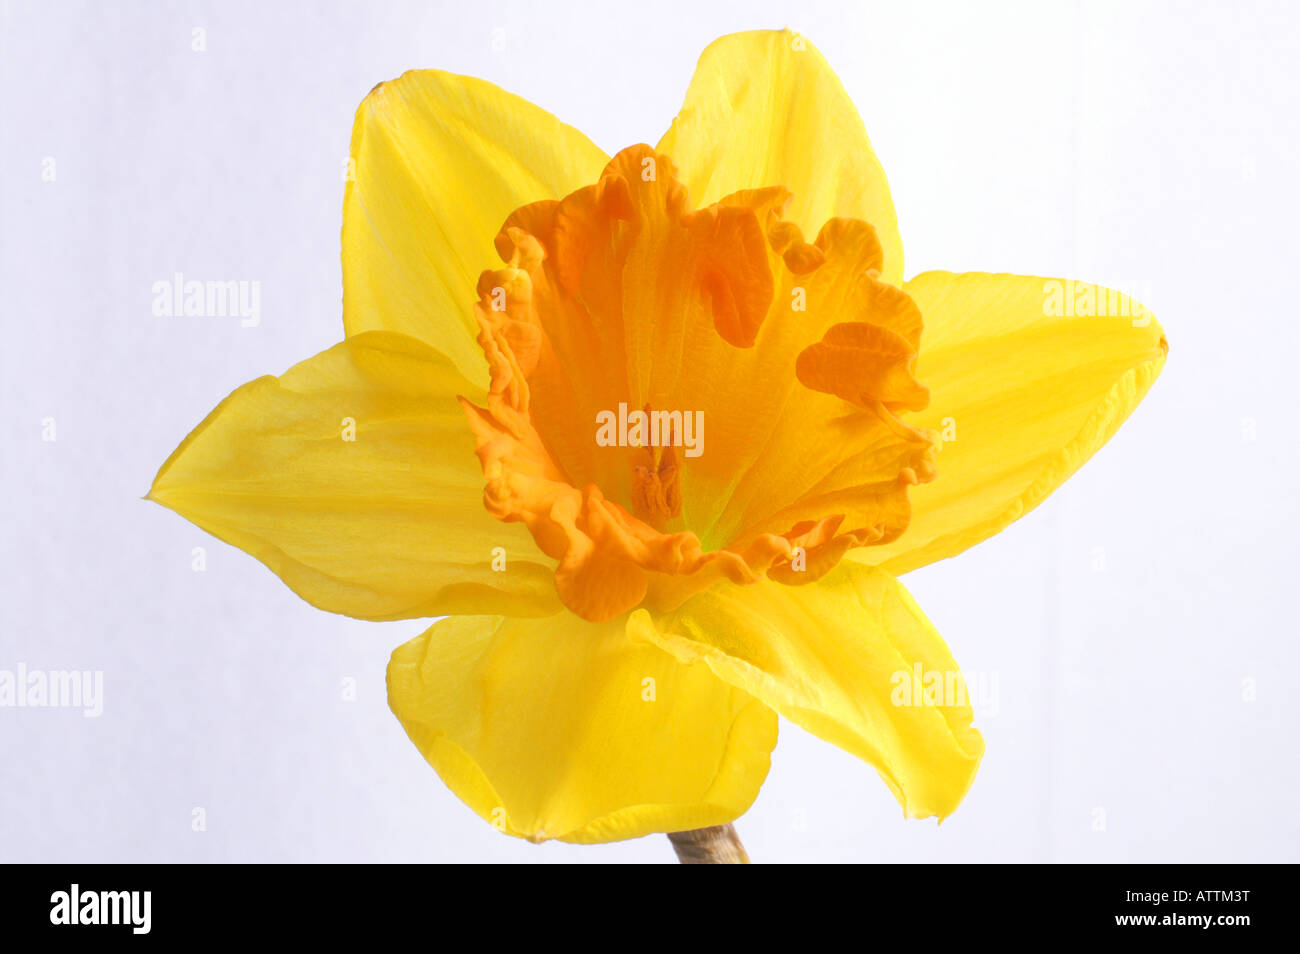 Gelbe Narzisse (Narcissus pseudonarcissus) / Osterglocke Stock Photo